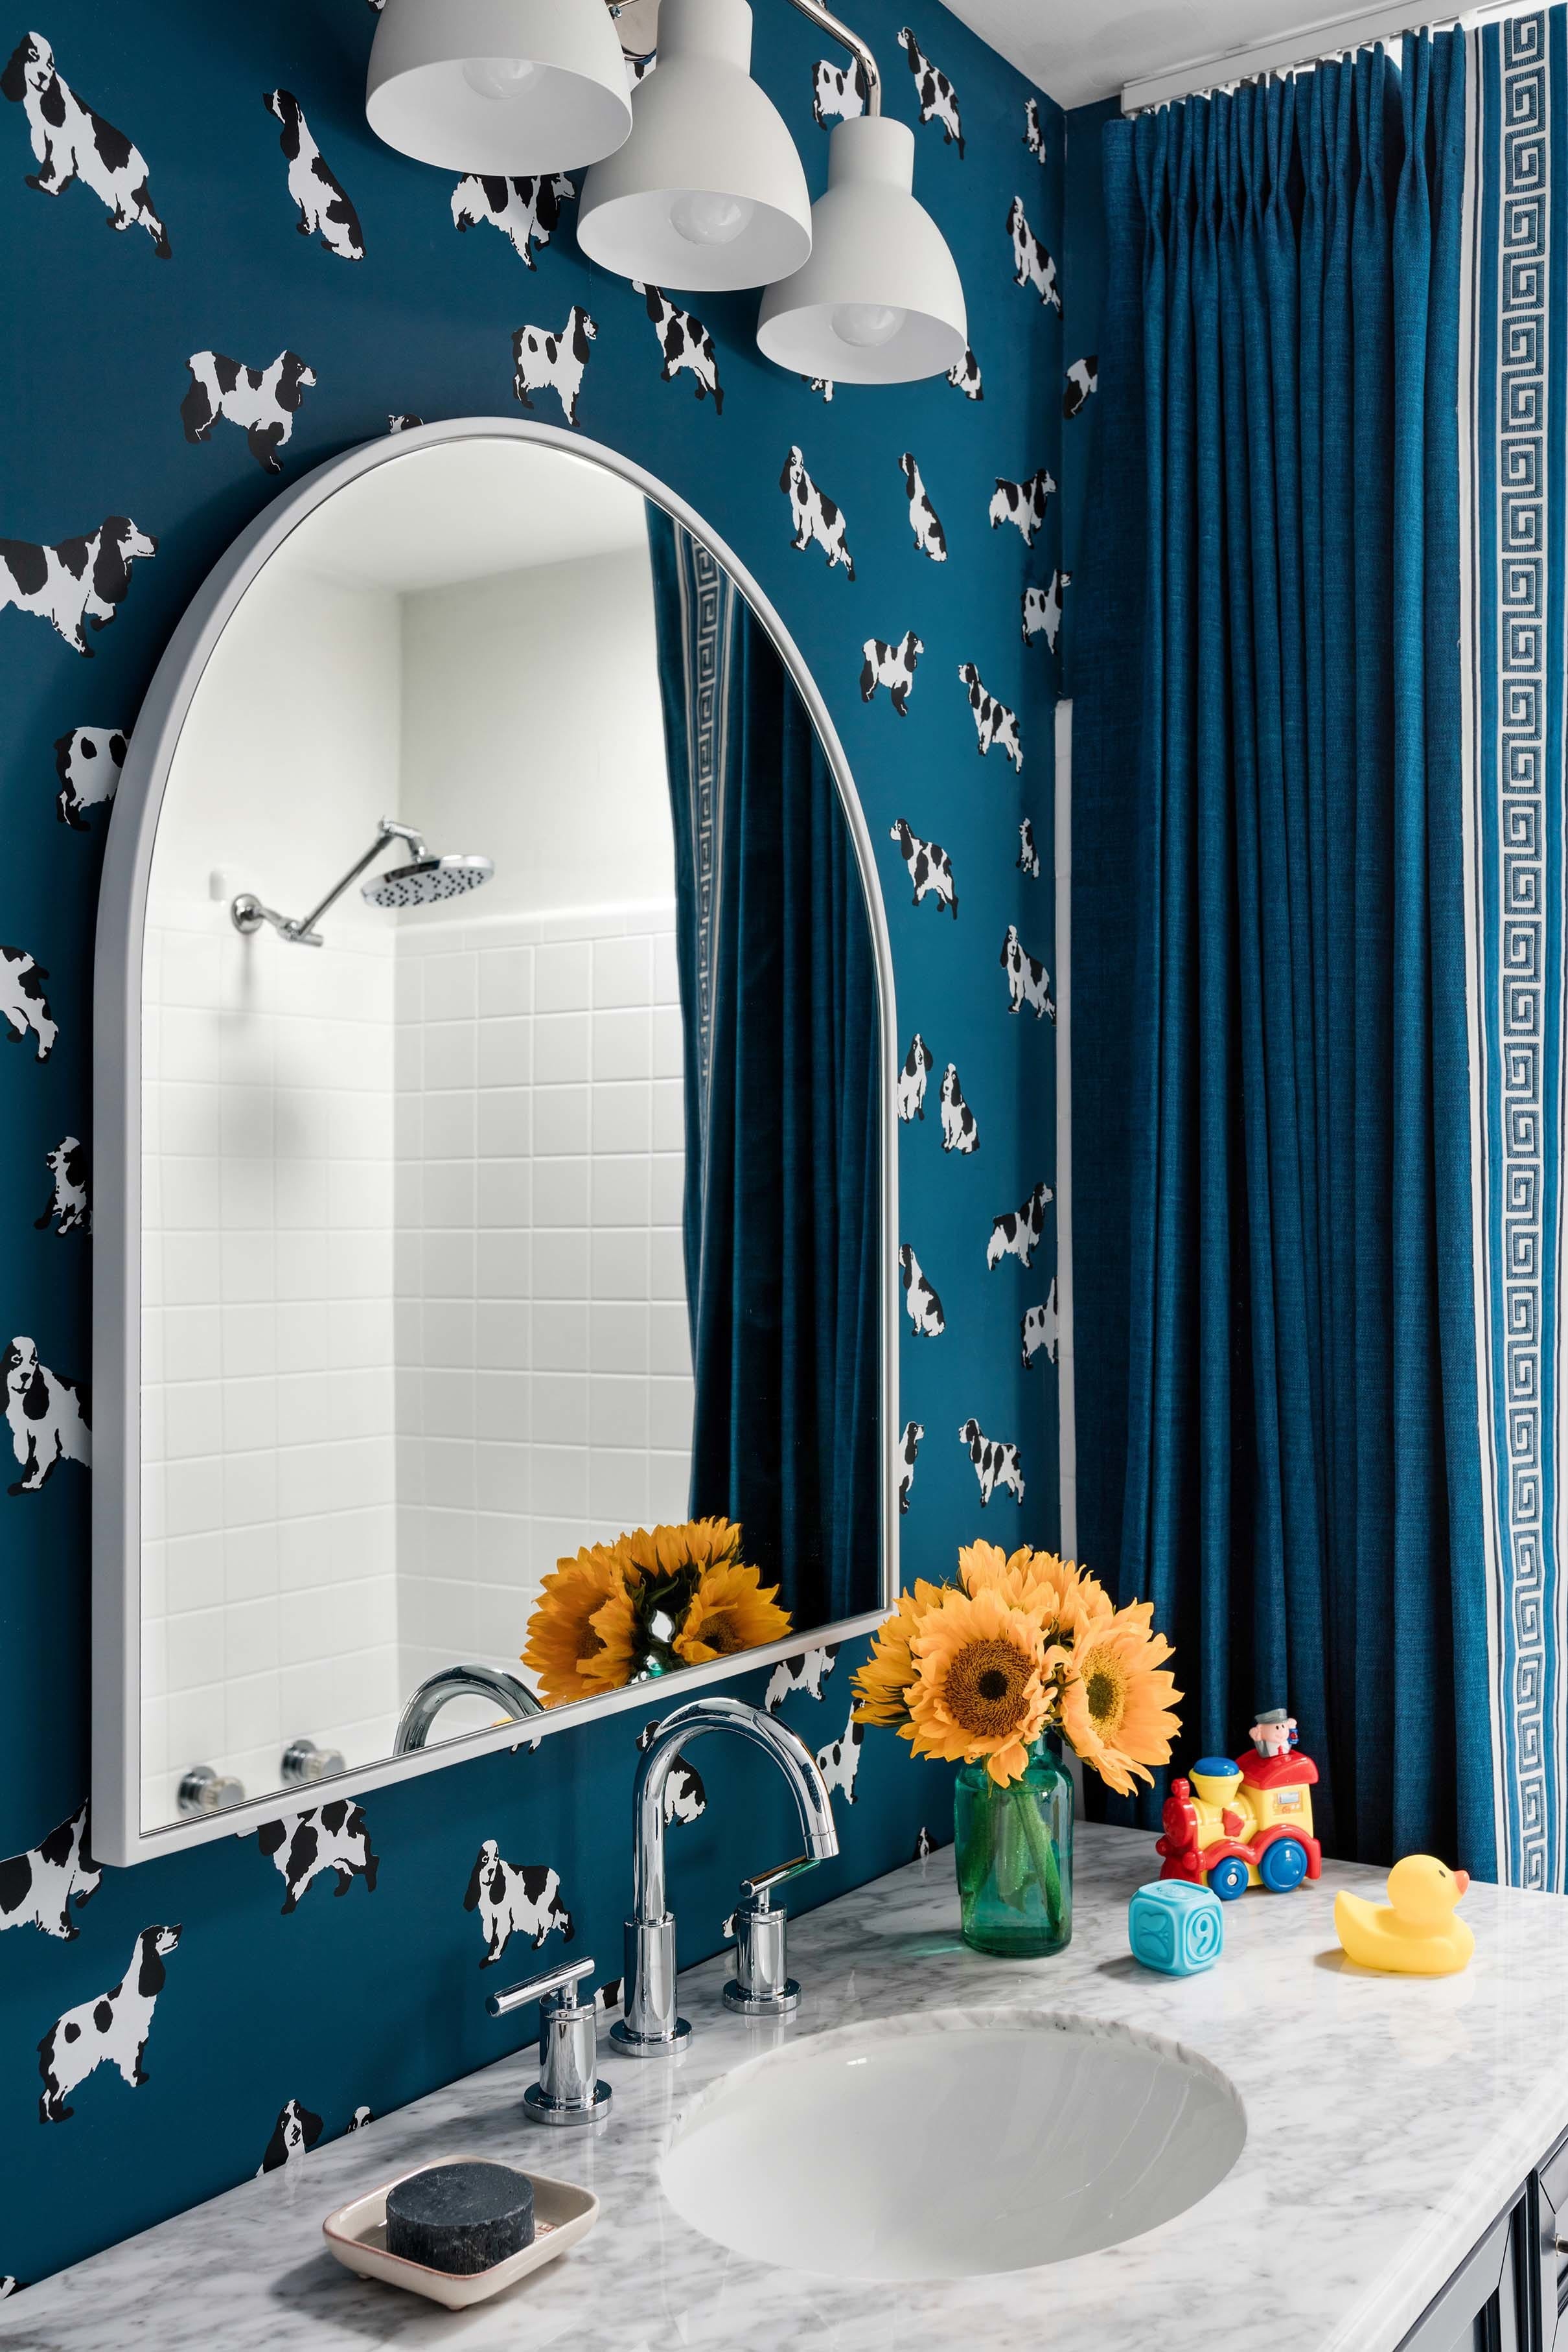 Bathroom vanity mirror blue dog wallpaper